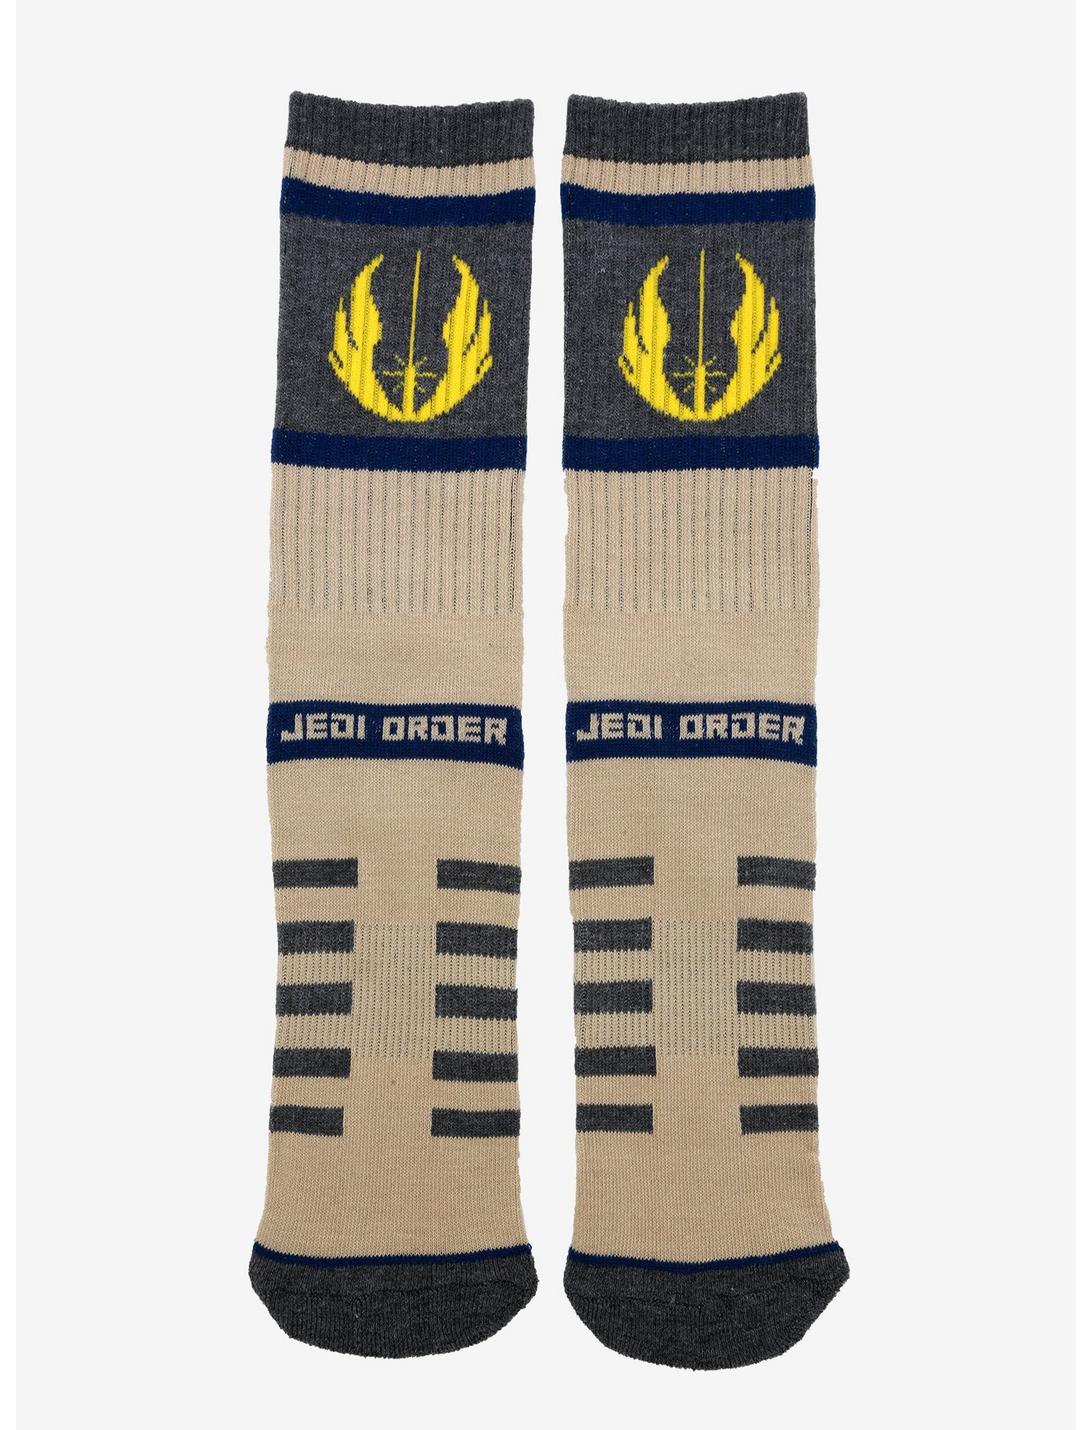 Star Wars Jedi Order Crew Socks - BoxLunch Exclusive, , hi-res